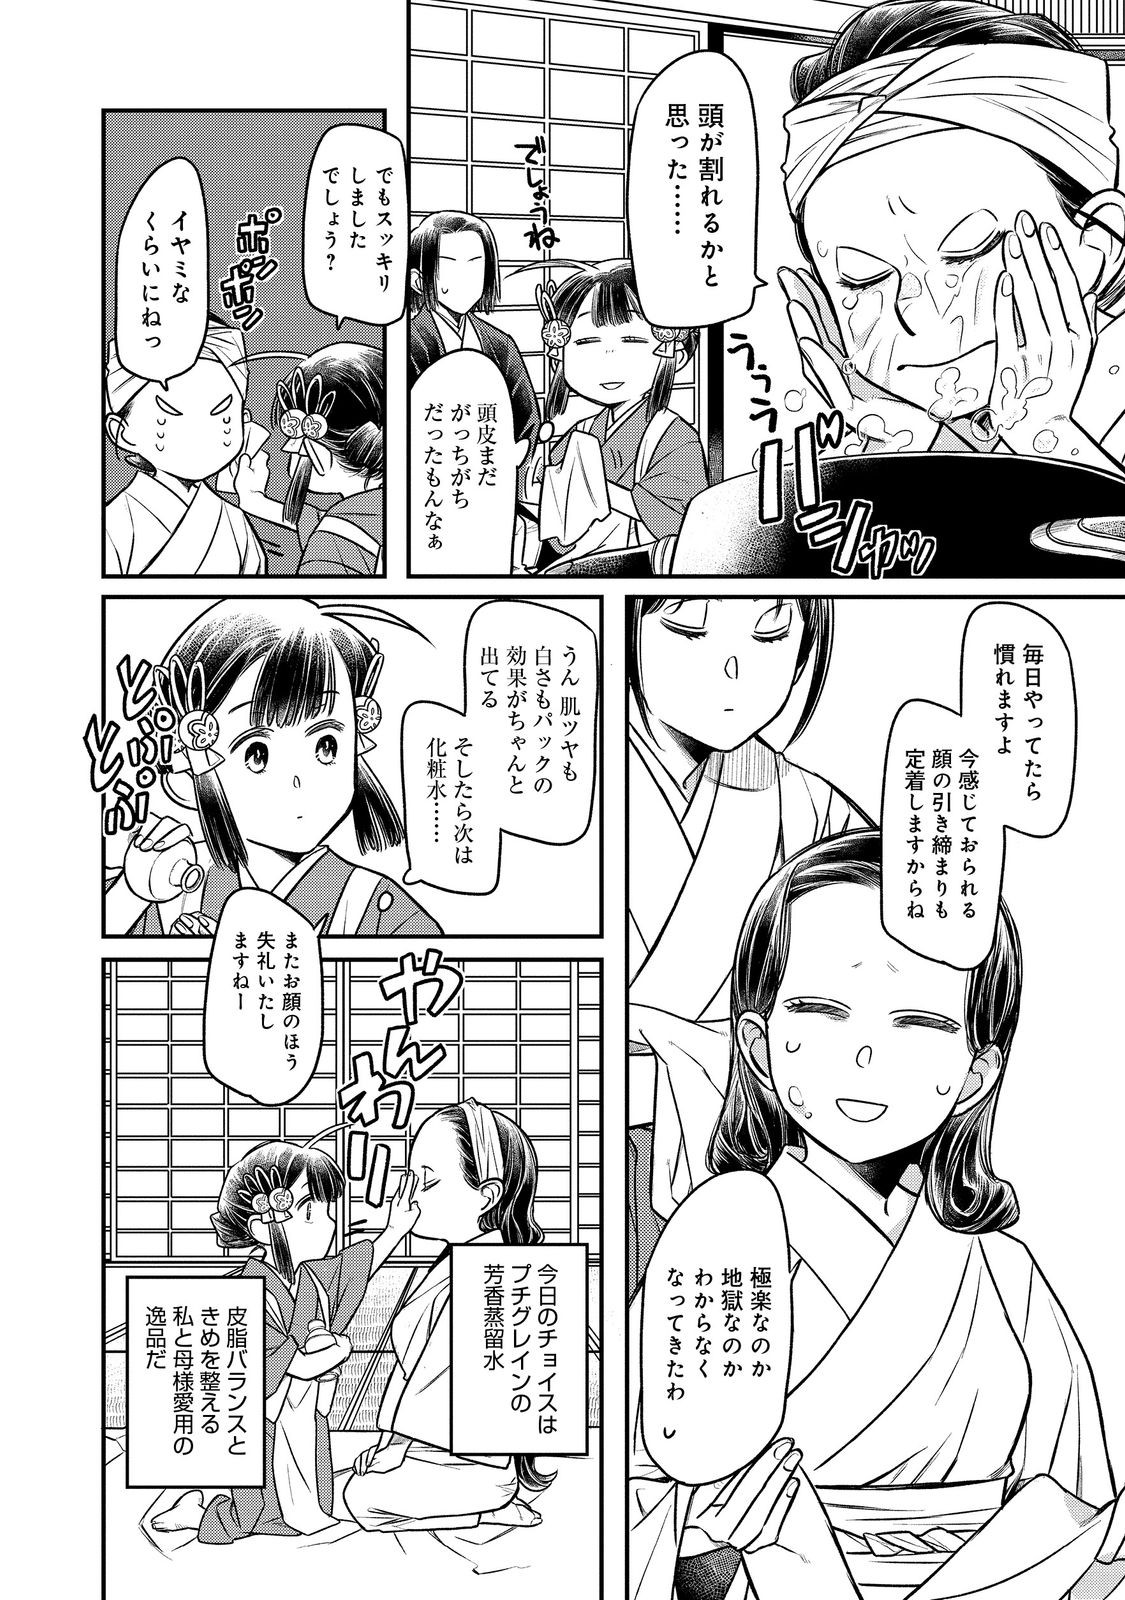 Kitanomandokoro-sama no Okeshougakari - Chapter 10.1 - Page 12